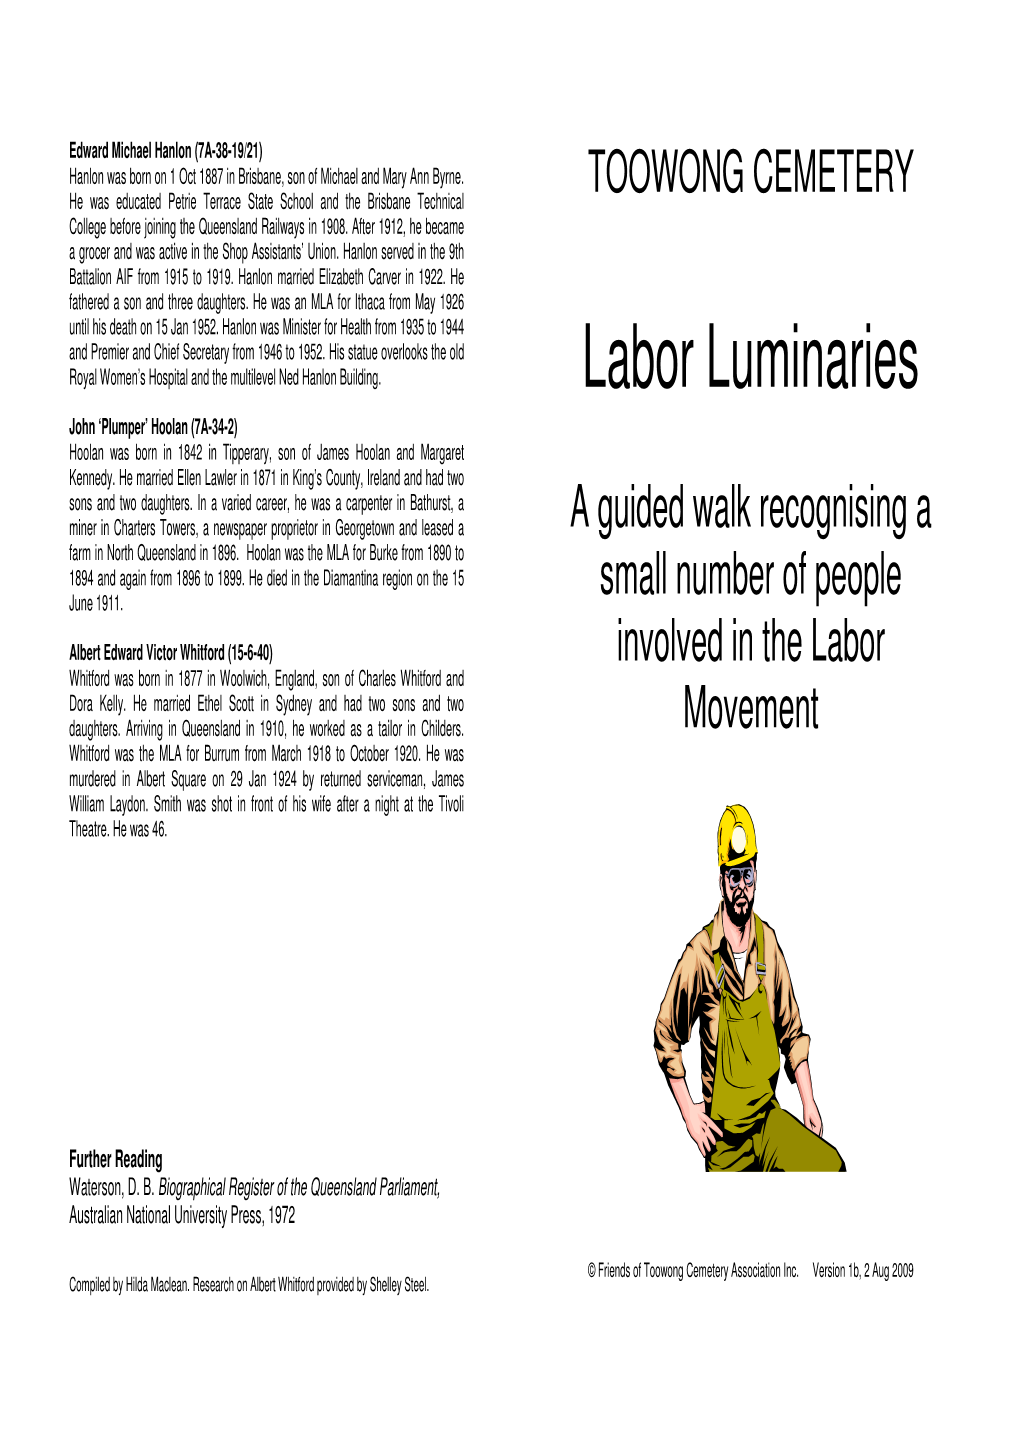 Labor Luminaries